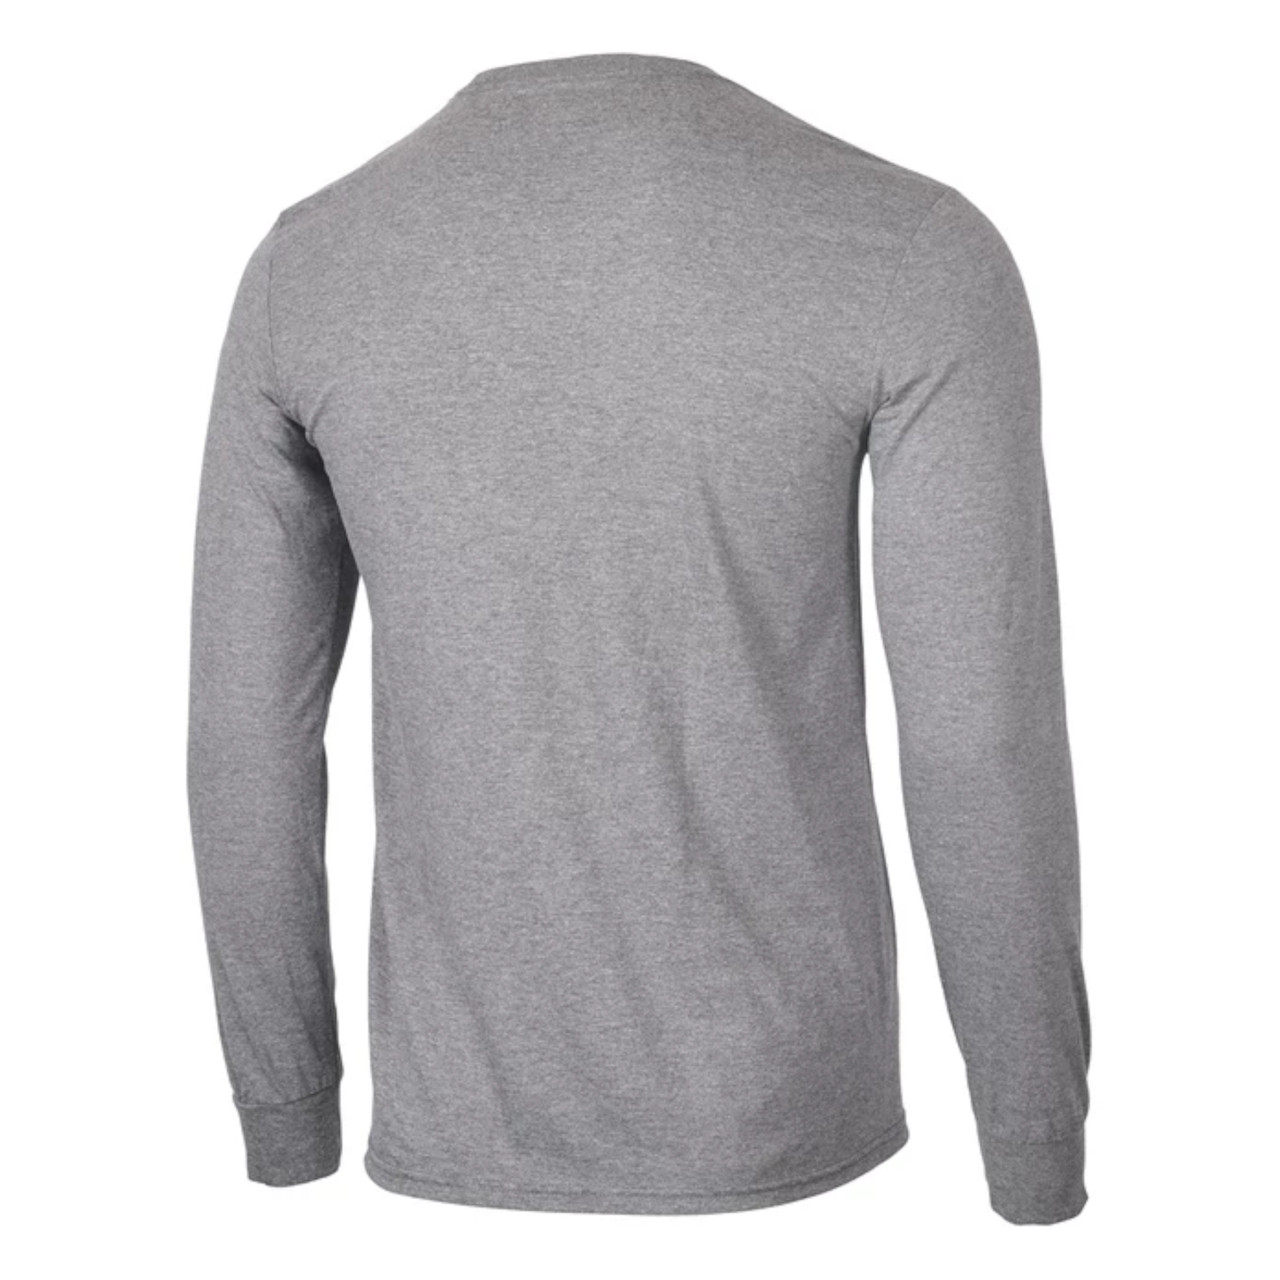 Polaris New OEM Men's Medium Ranger Branded Long Sleeve Tee Shirt, 283309303